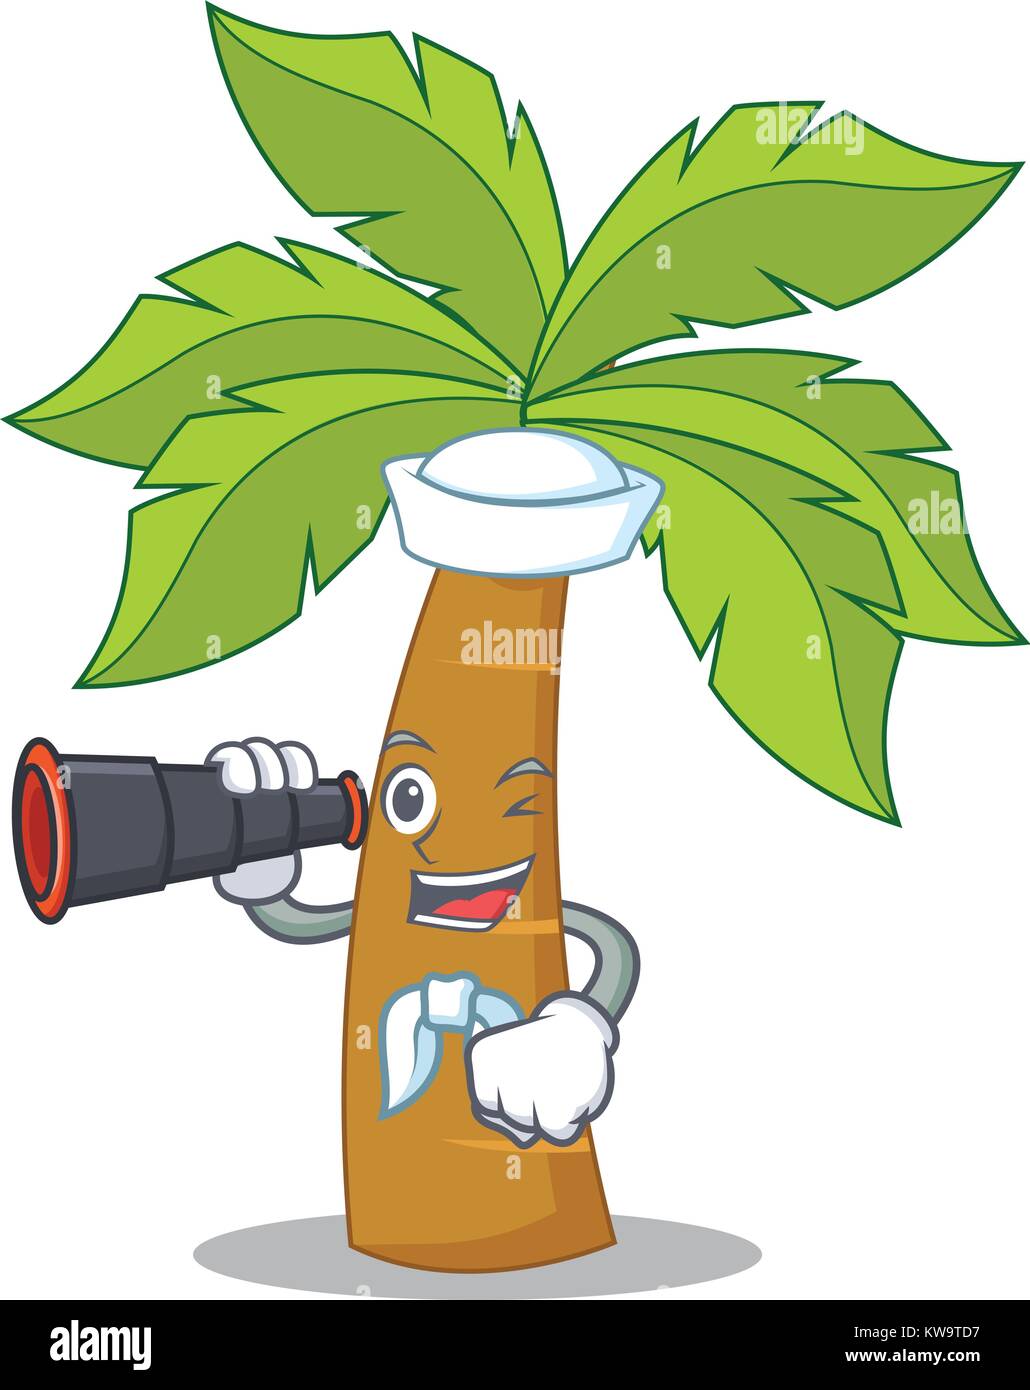 Sailor with binocular palm tree character cartoon Stock Vector